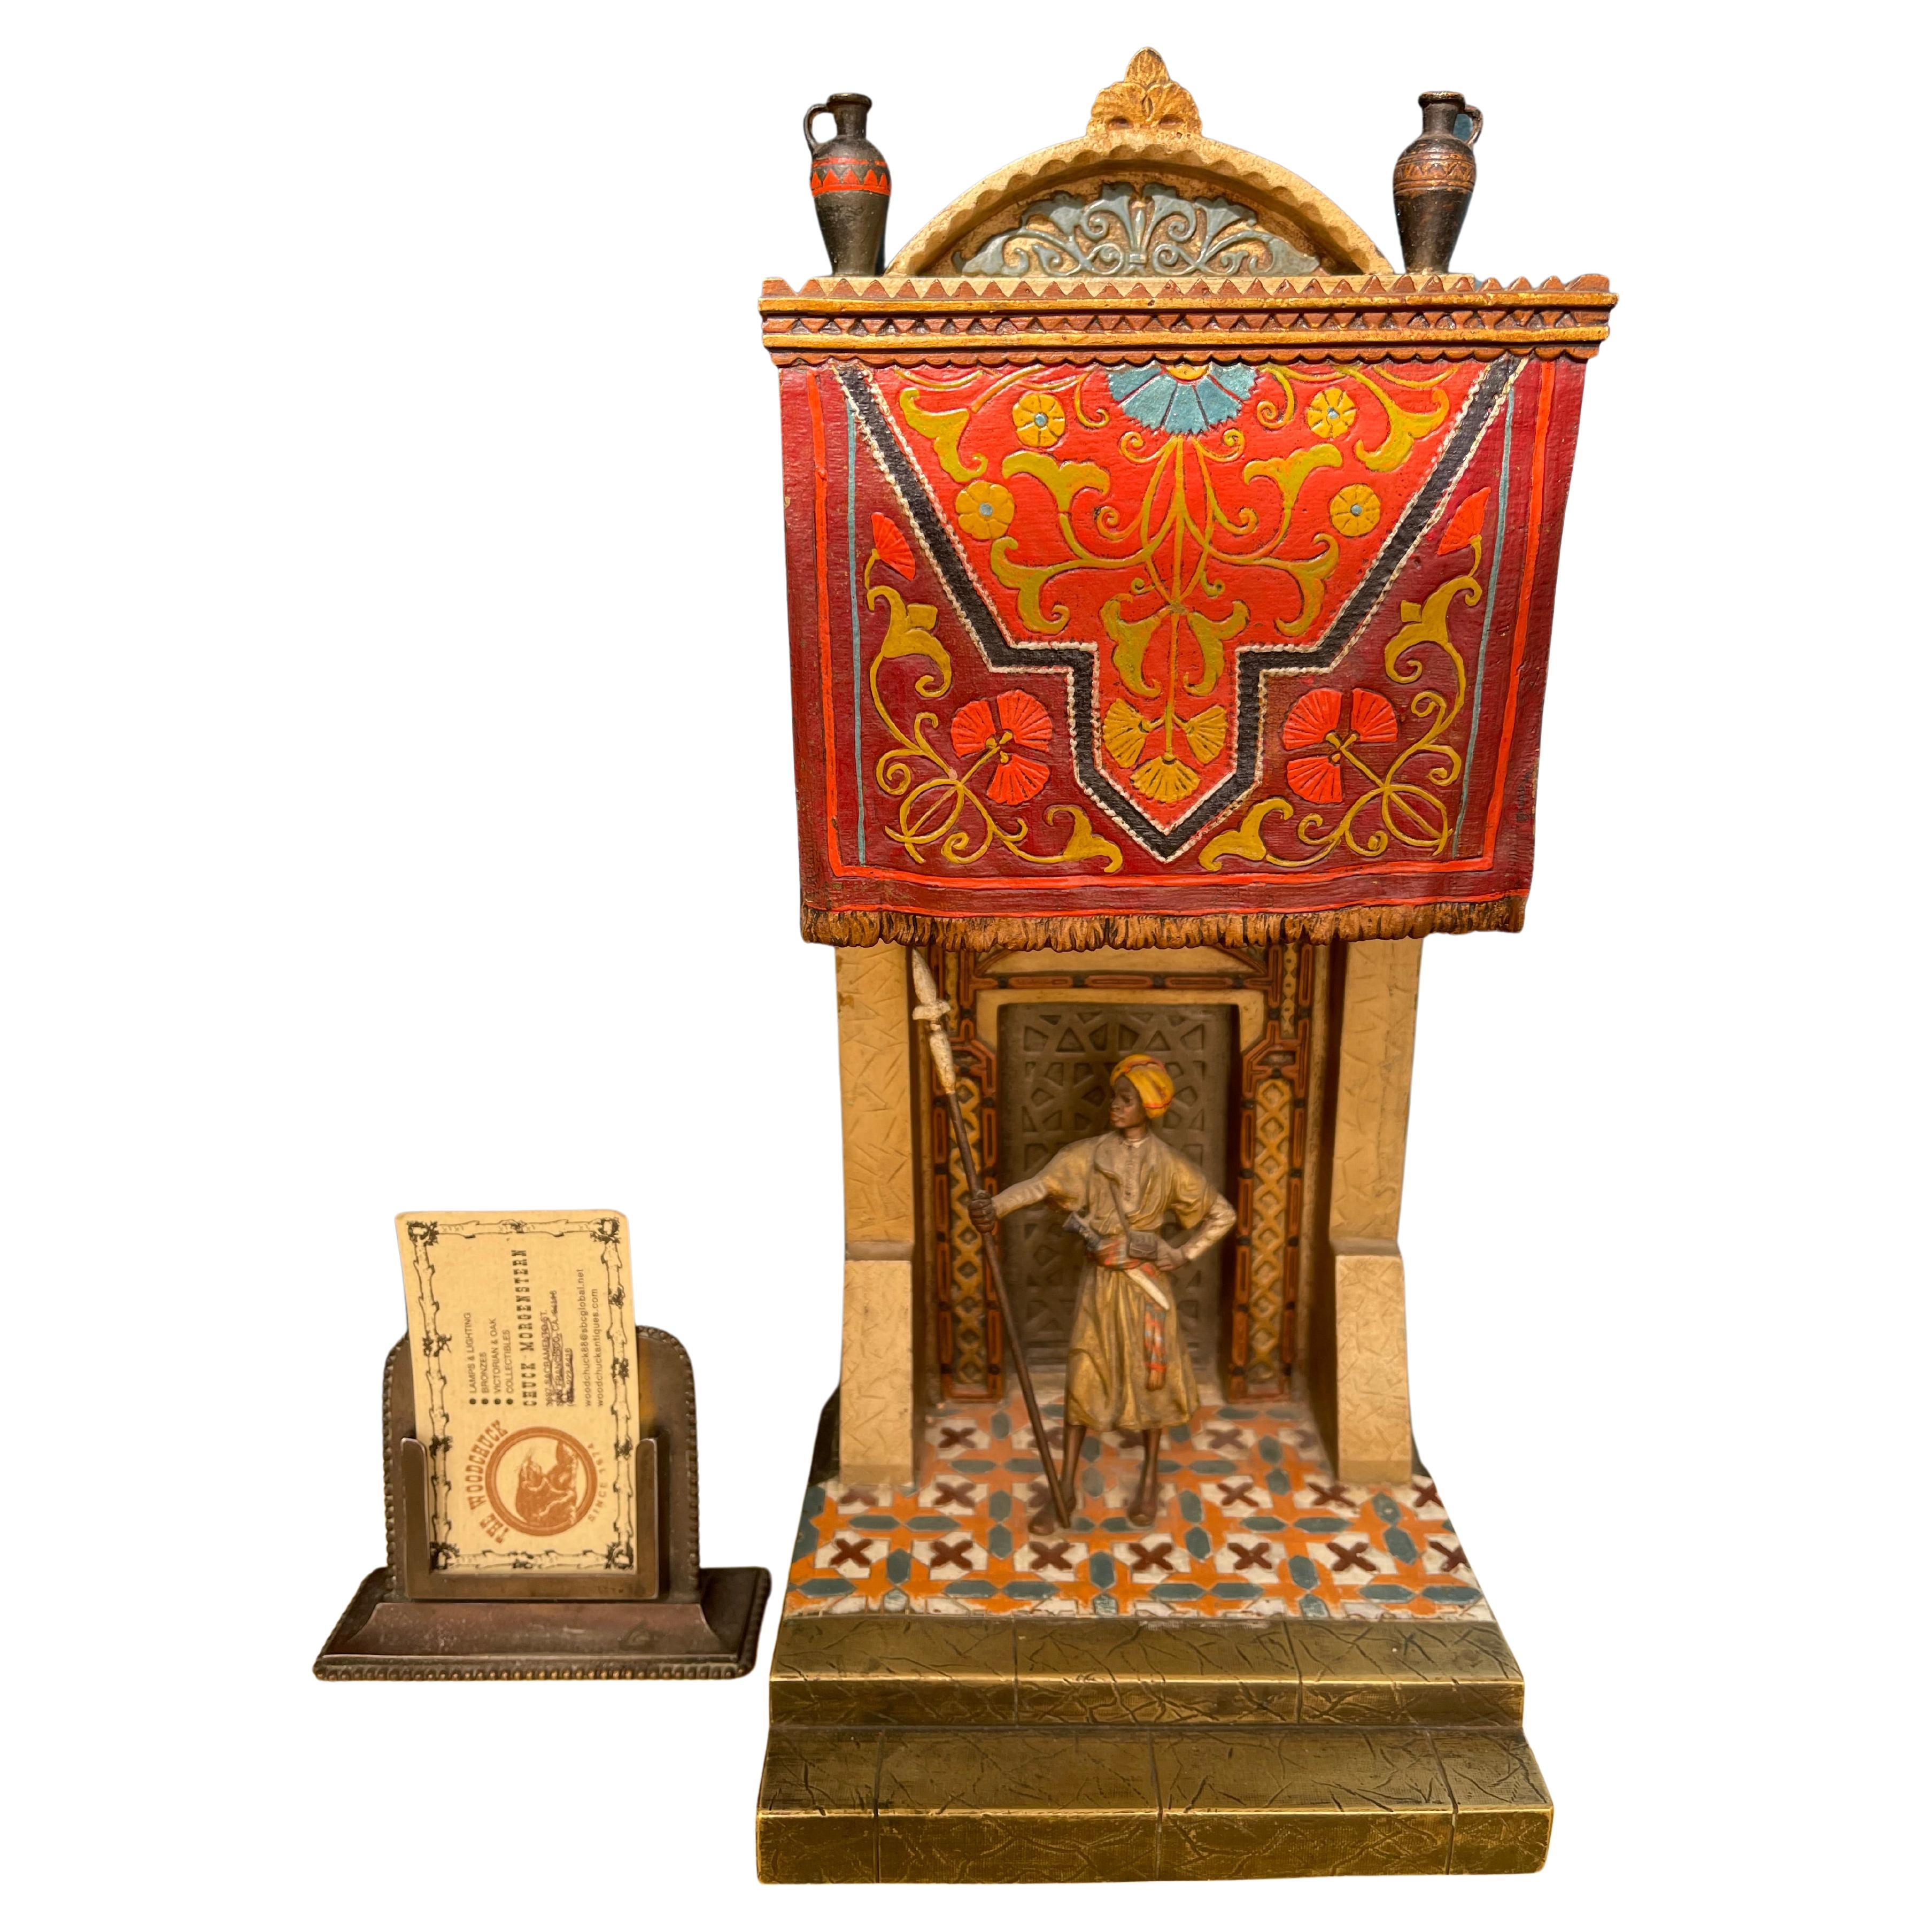 Orientalist Cold Painted Vienna Bronze Lamp, Guard & Palace, Signed "Chotka"